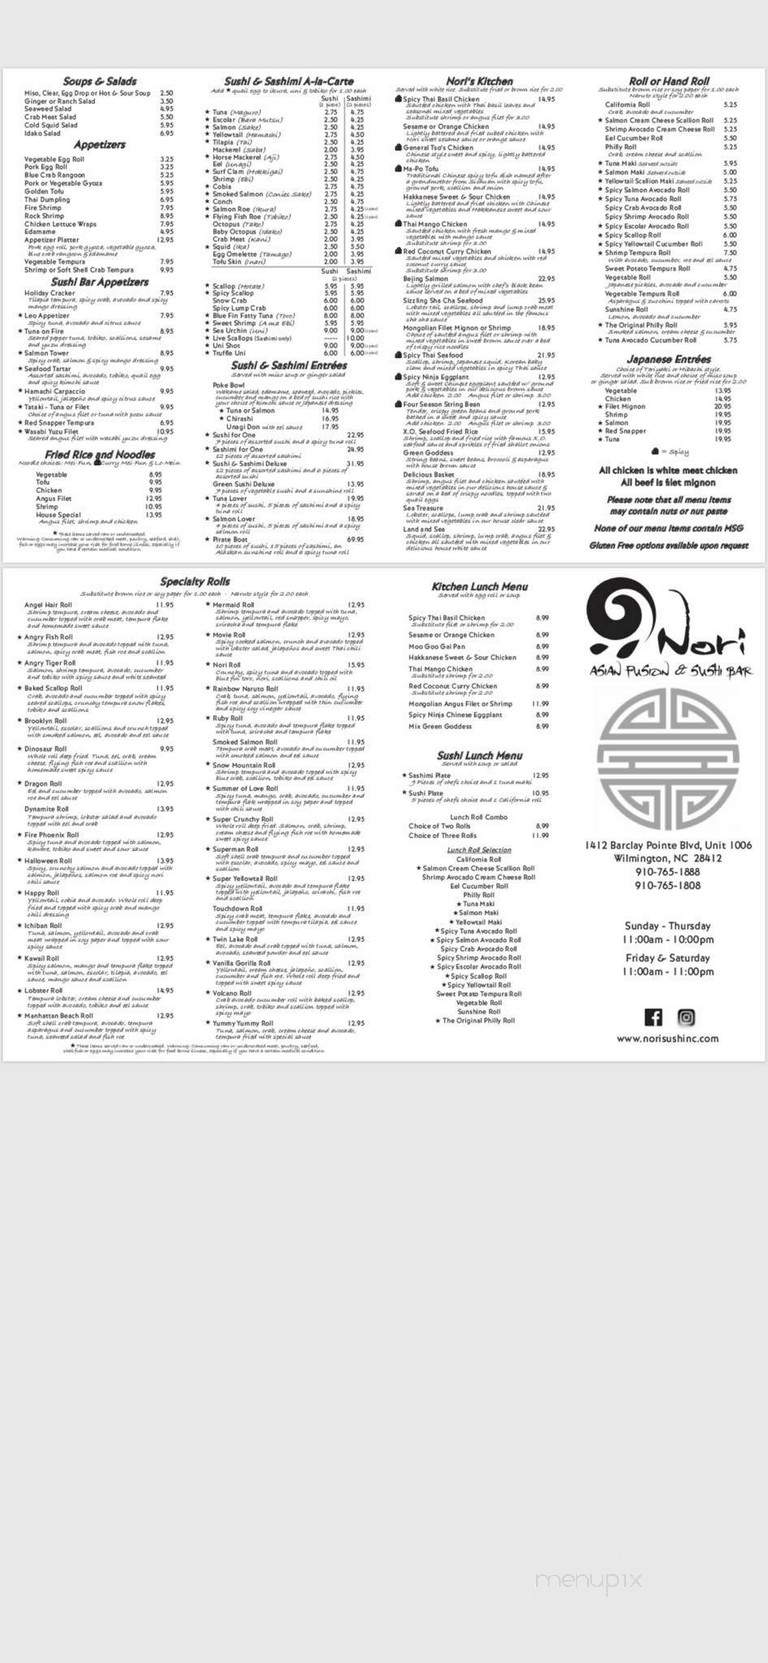 Nori Asian fusion and sushi bar - Wilmington, NC